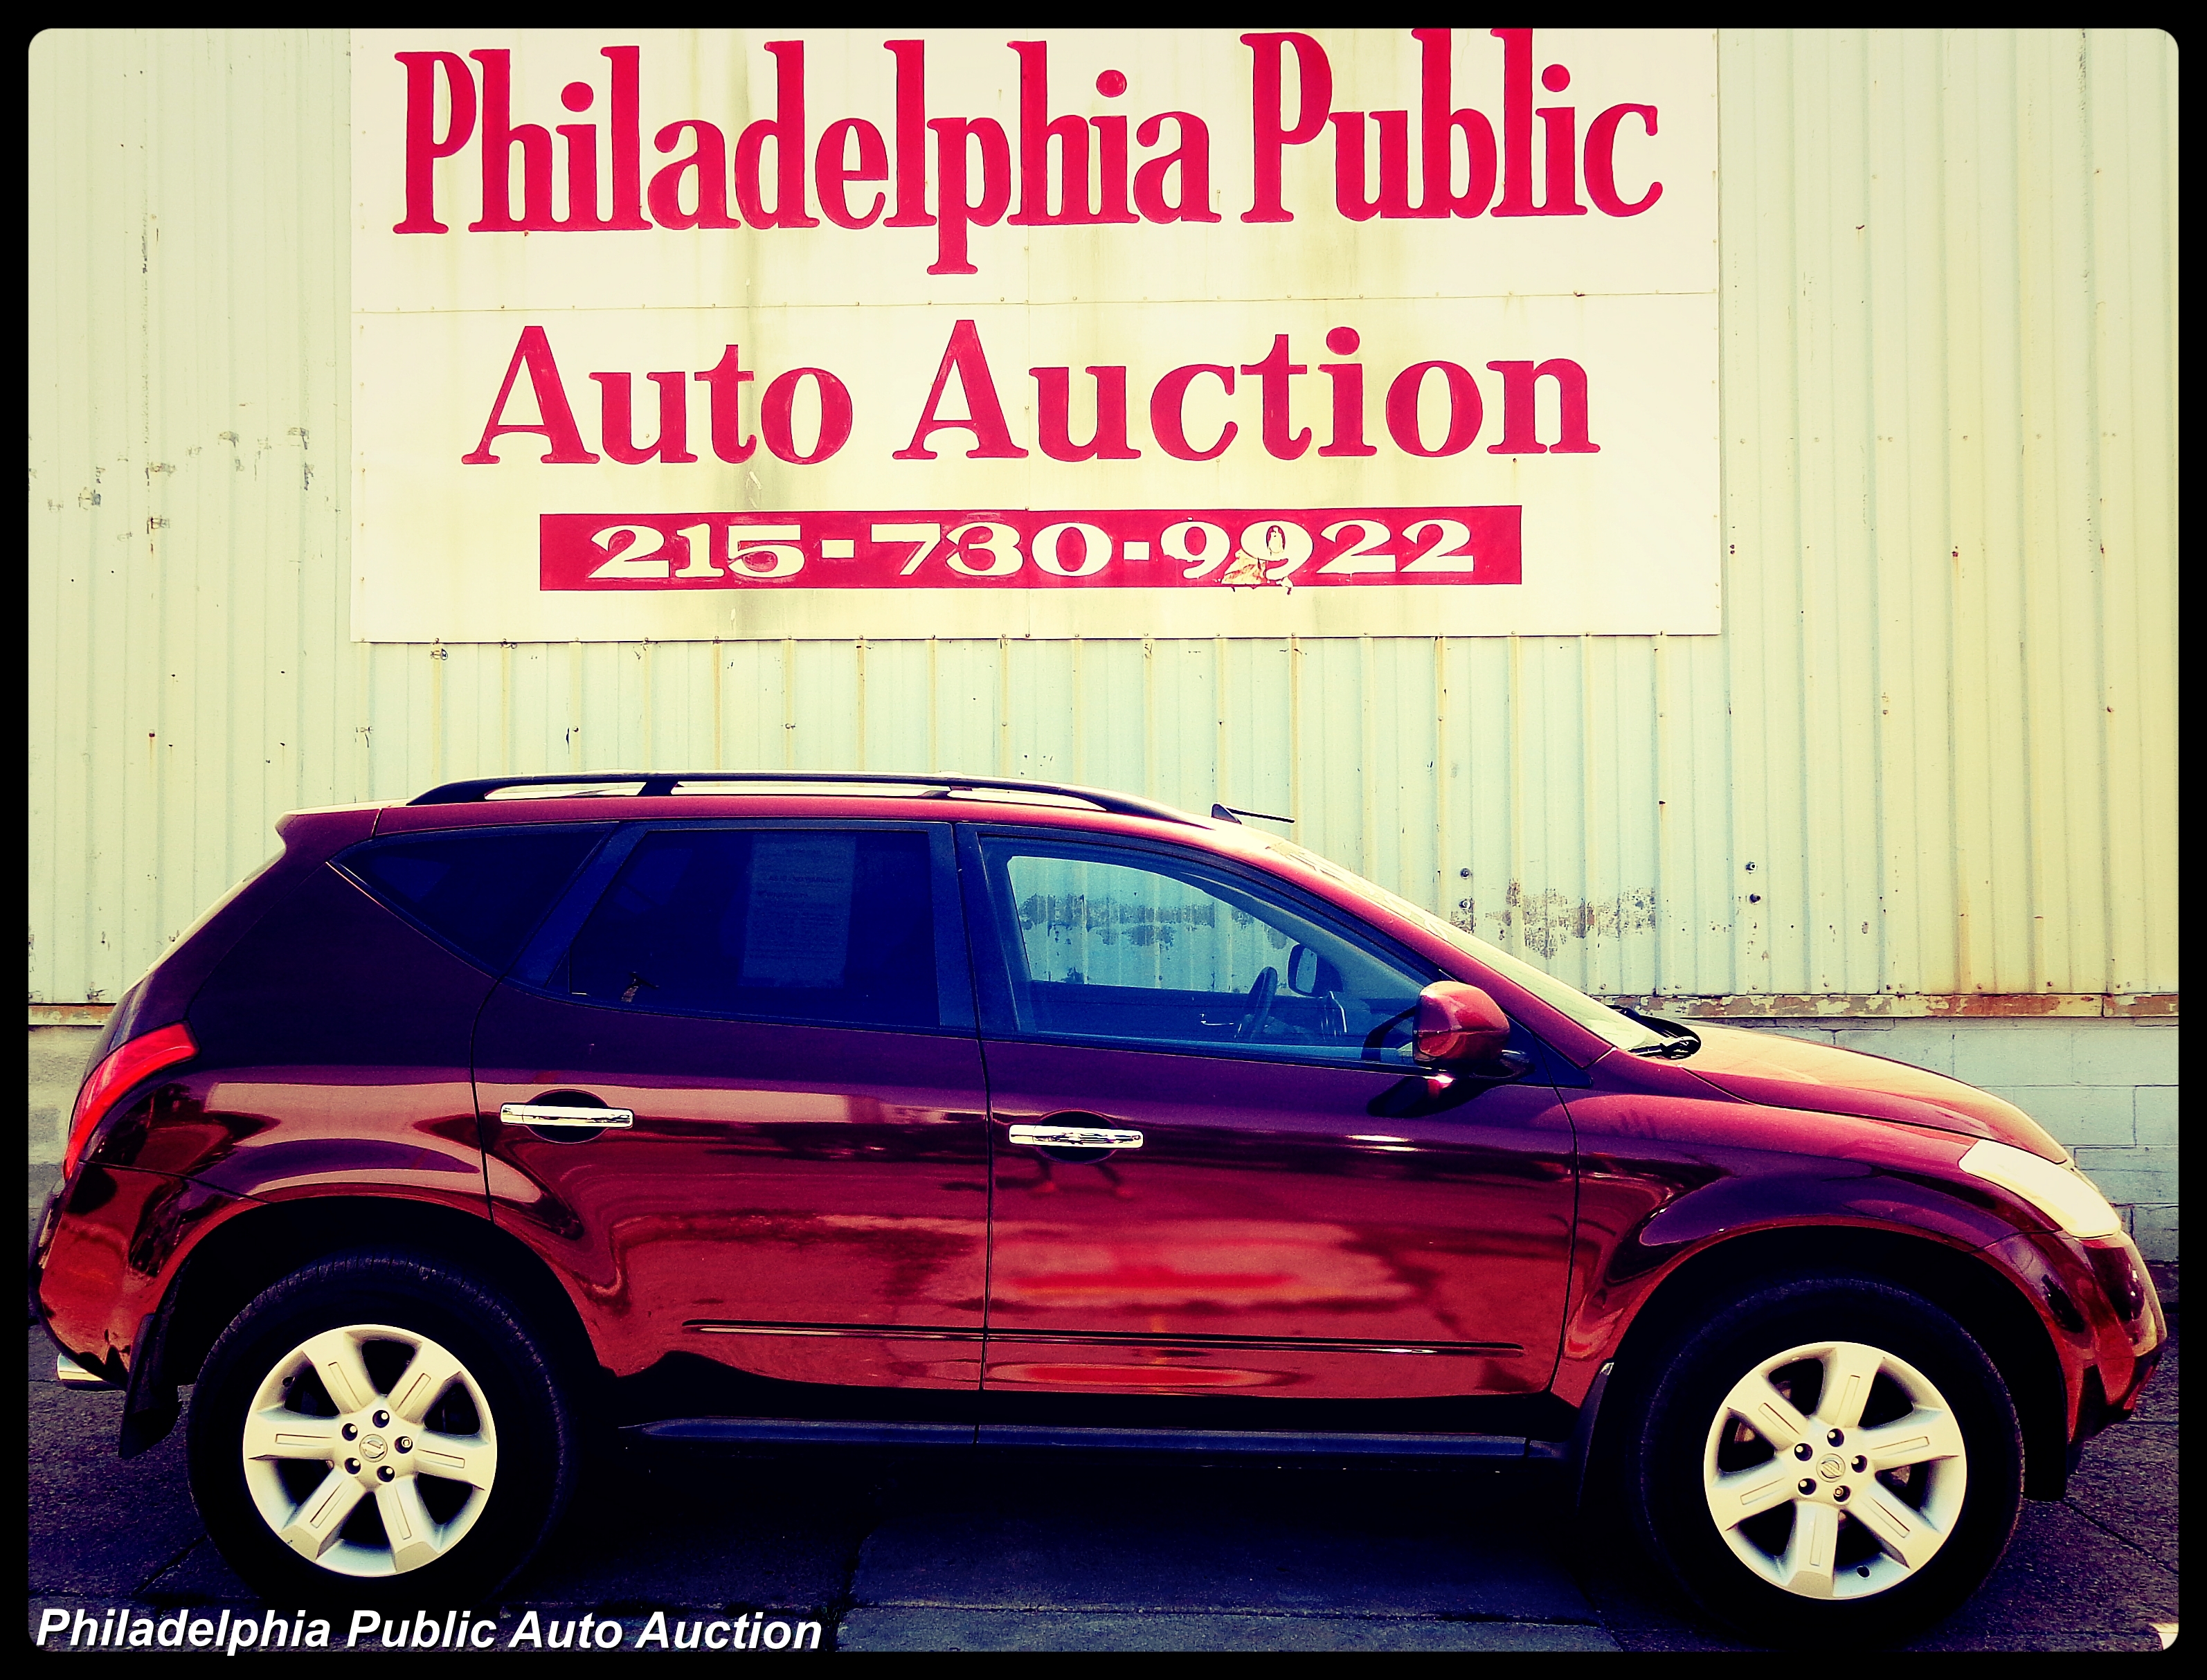 Philadelphia Public Auto-Auction Coupons near me in ...